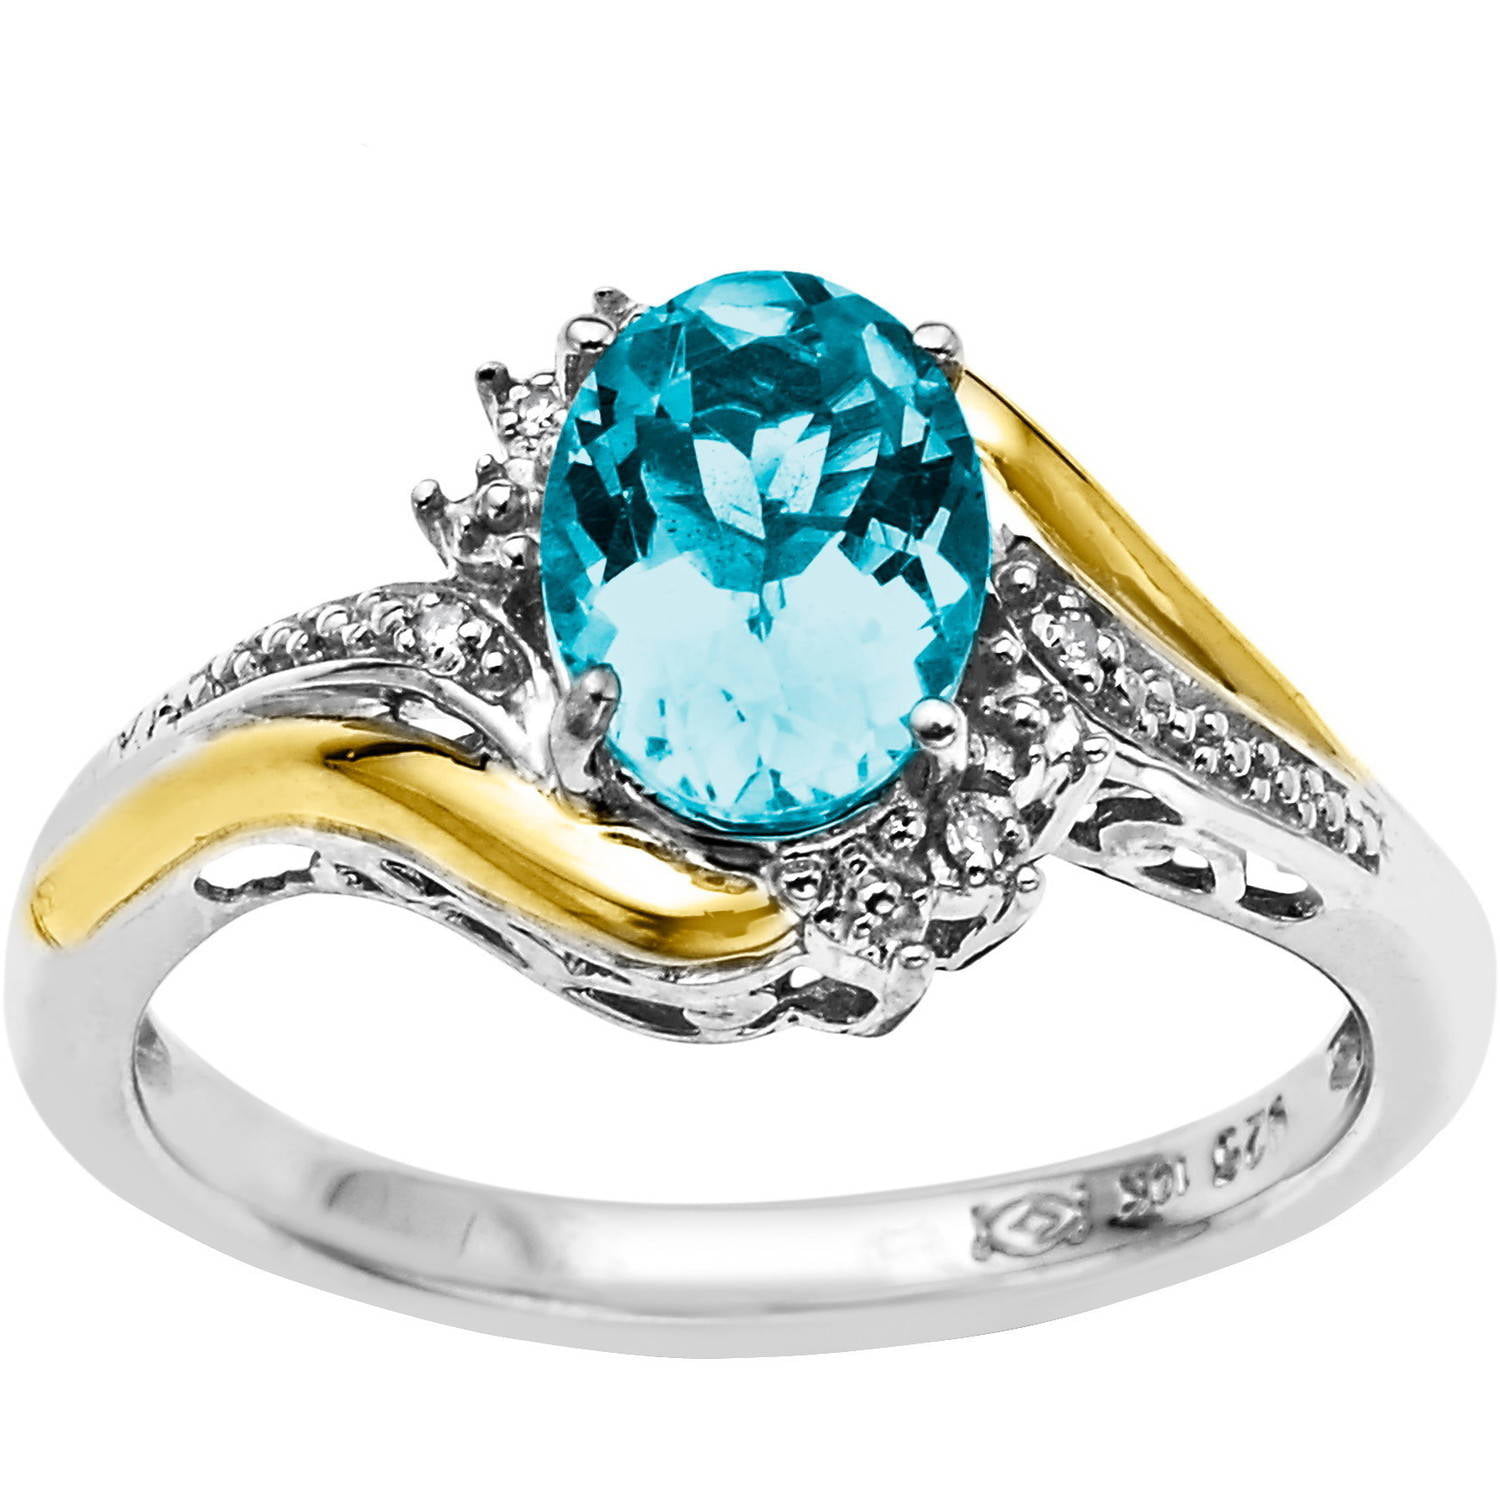 FB Jewels 1.08 Carat Genuine Blue Topaz 925 Sterling Silver Birthstone Ring 